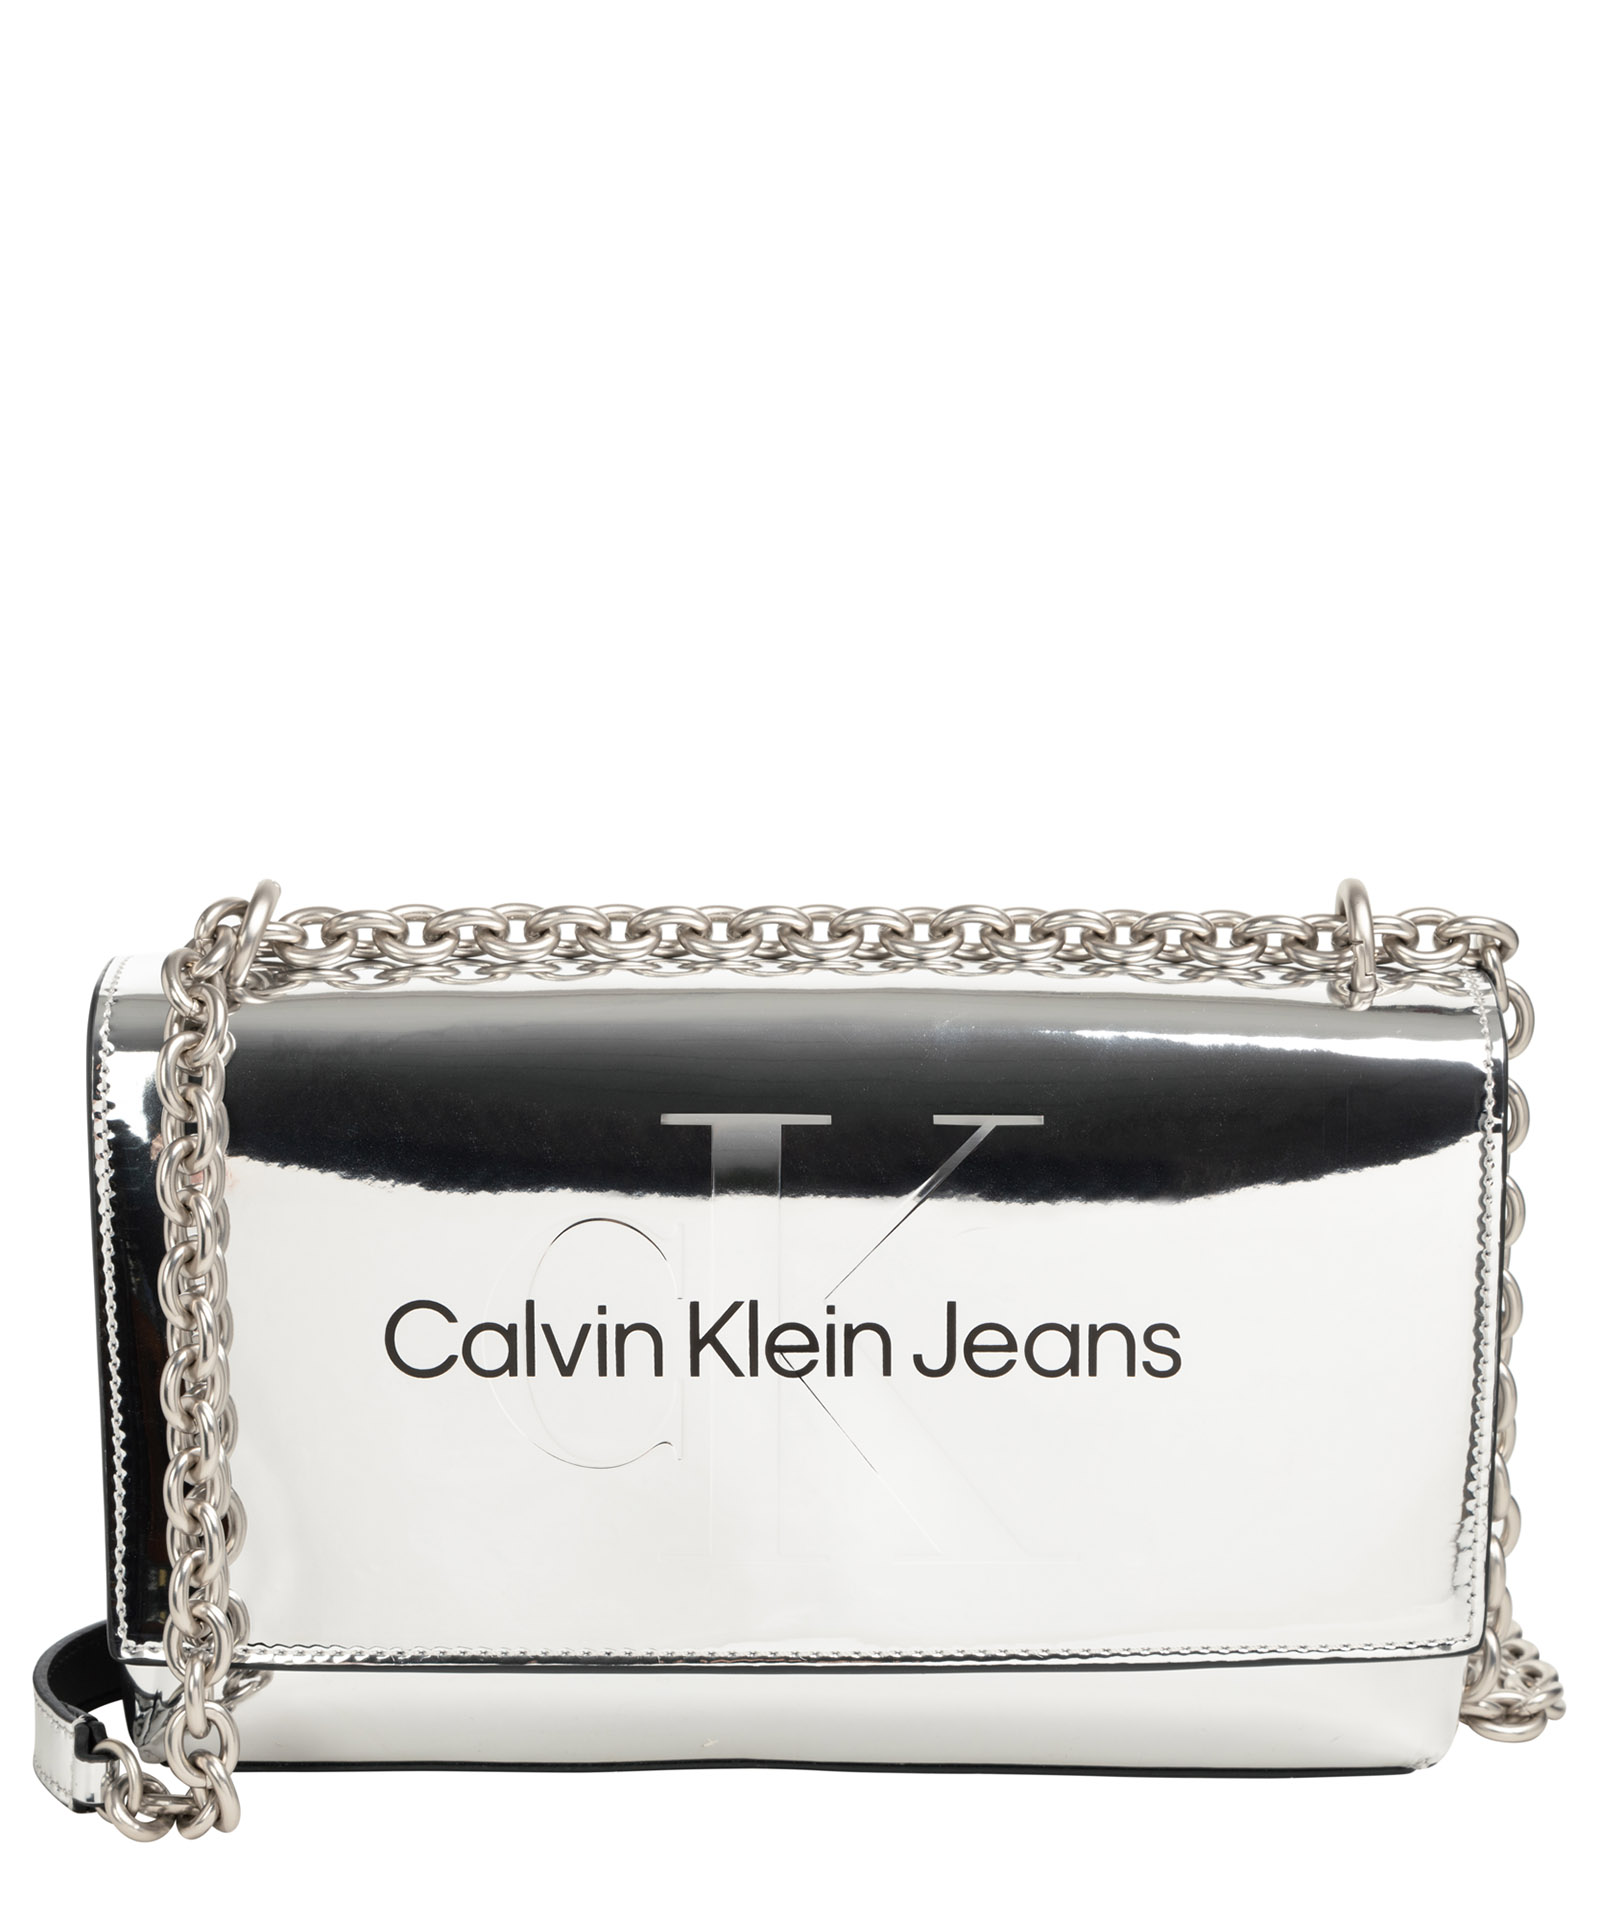 Calvin Klein Jeans Est.1978 Shoulder Bag In Metallic